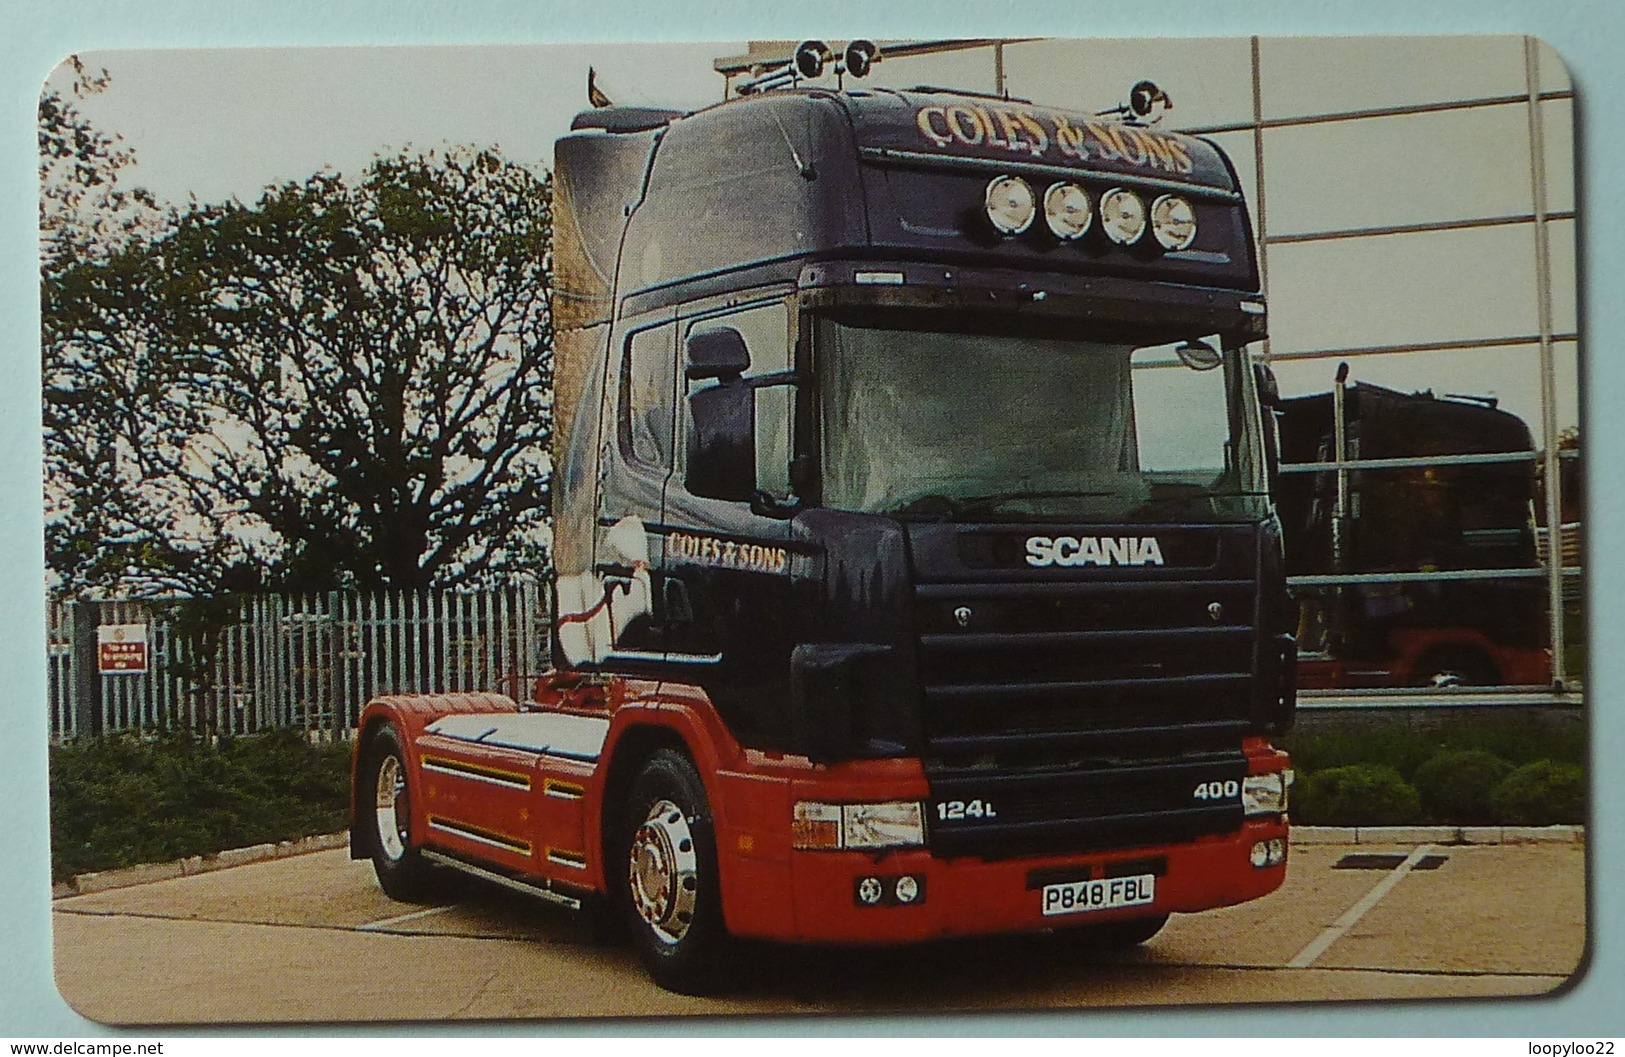 United Kingdom - BT - Chip - PRO261 - Super Trucks No 1 - Coles & Sons - 1000ex - Mint - BT Promotional